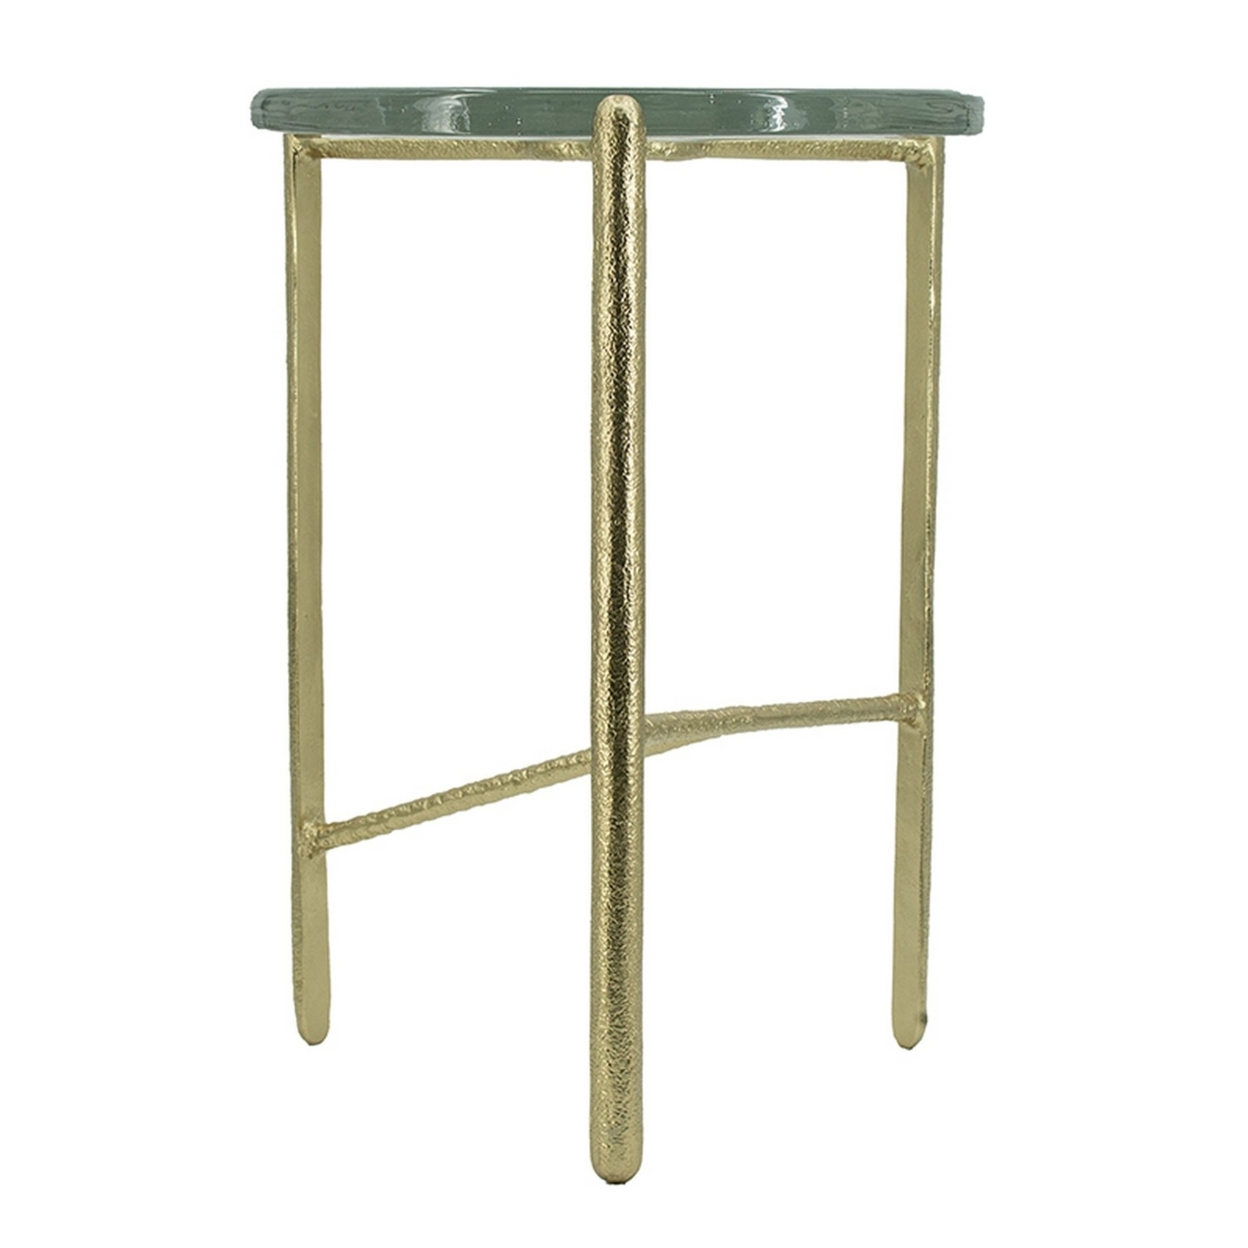 25 Inch Modern Aluminum Round End Table, Glass, Interconnected Legs, Gold- Saltoro Sherpi